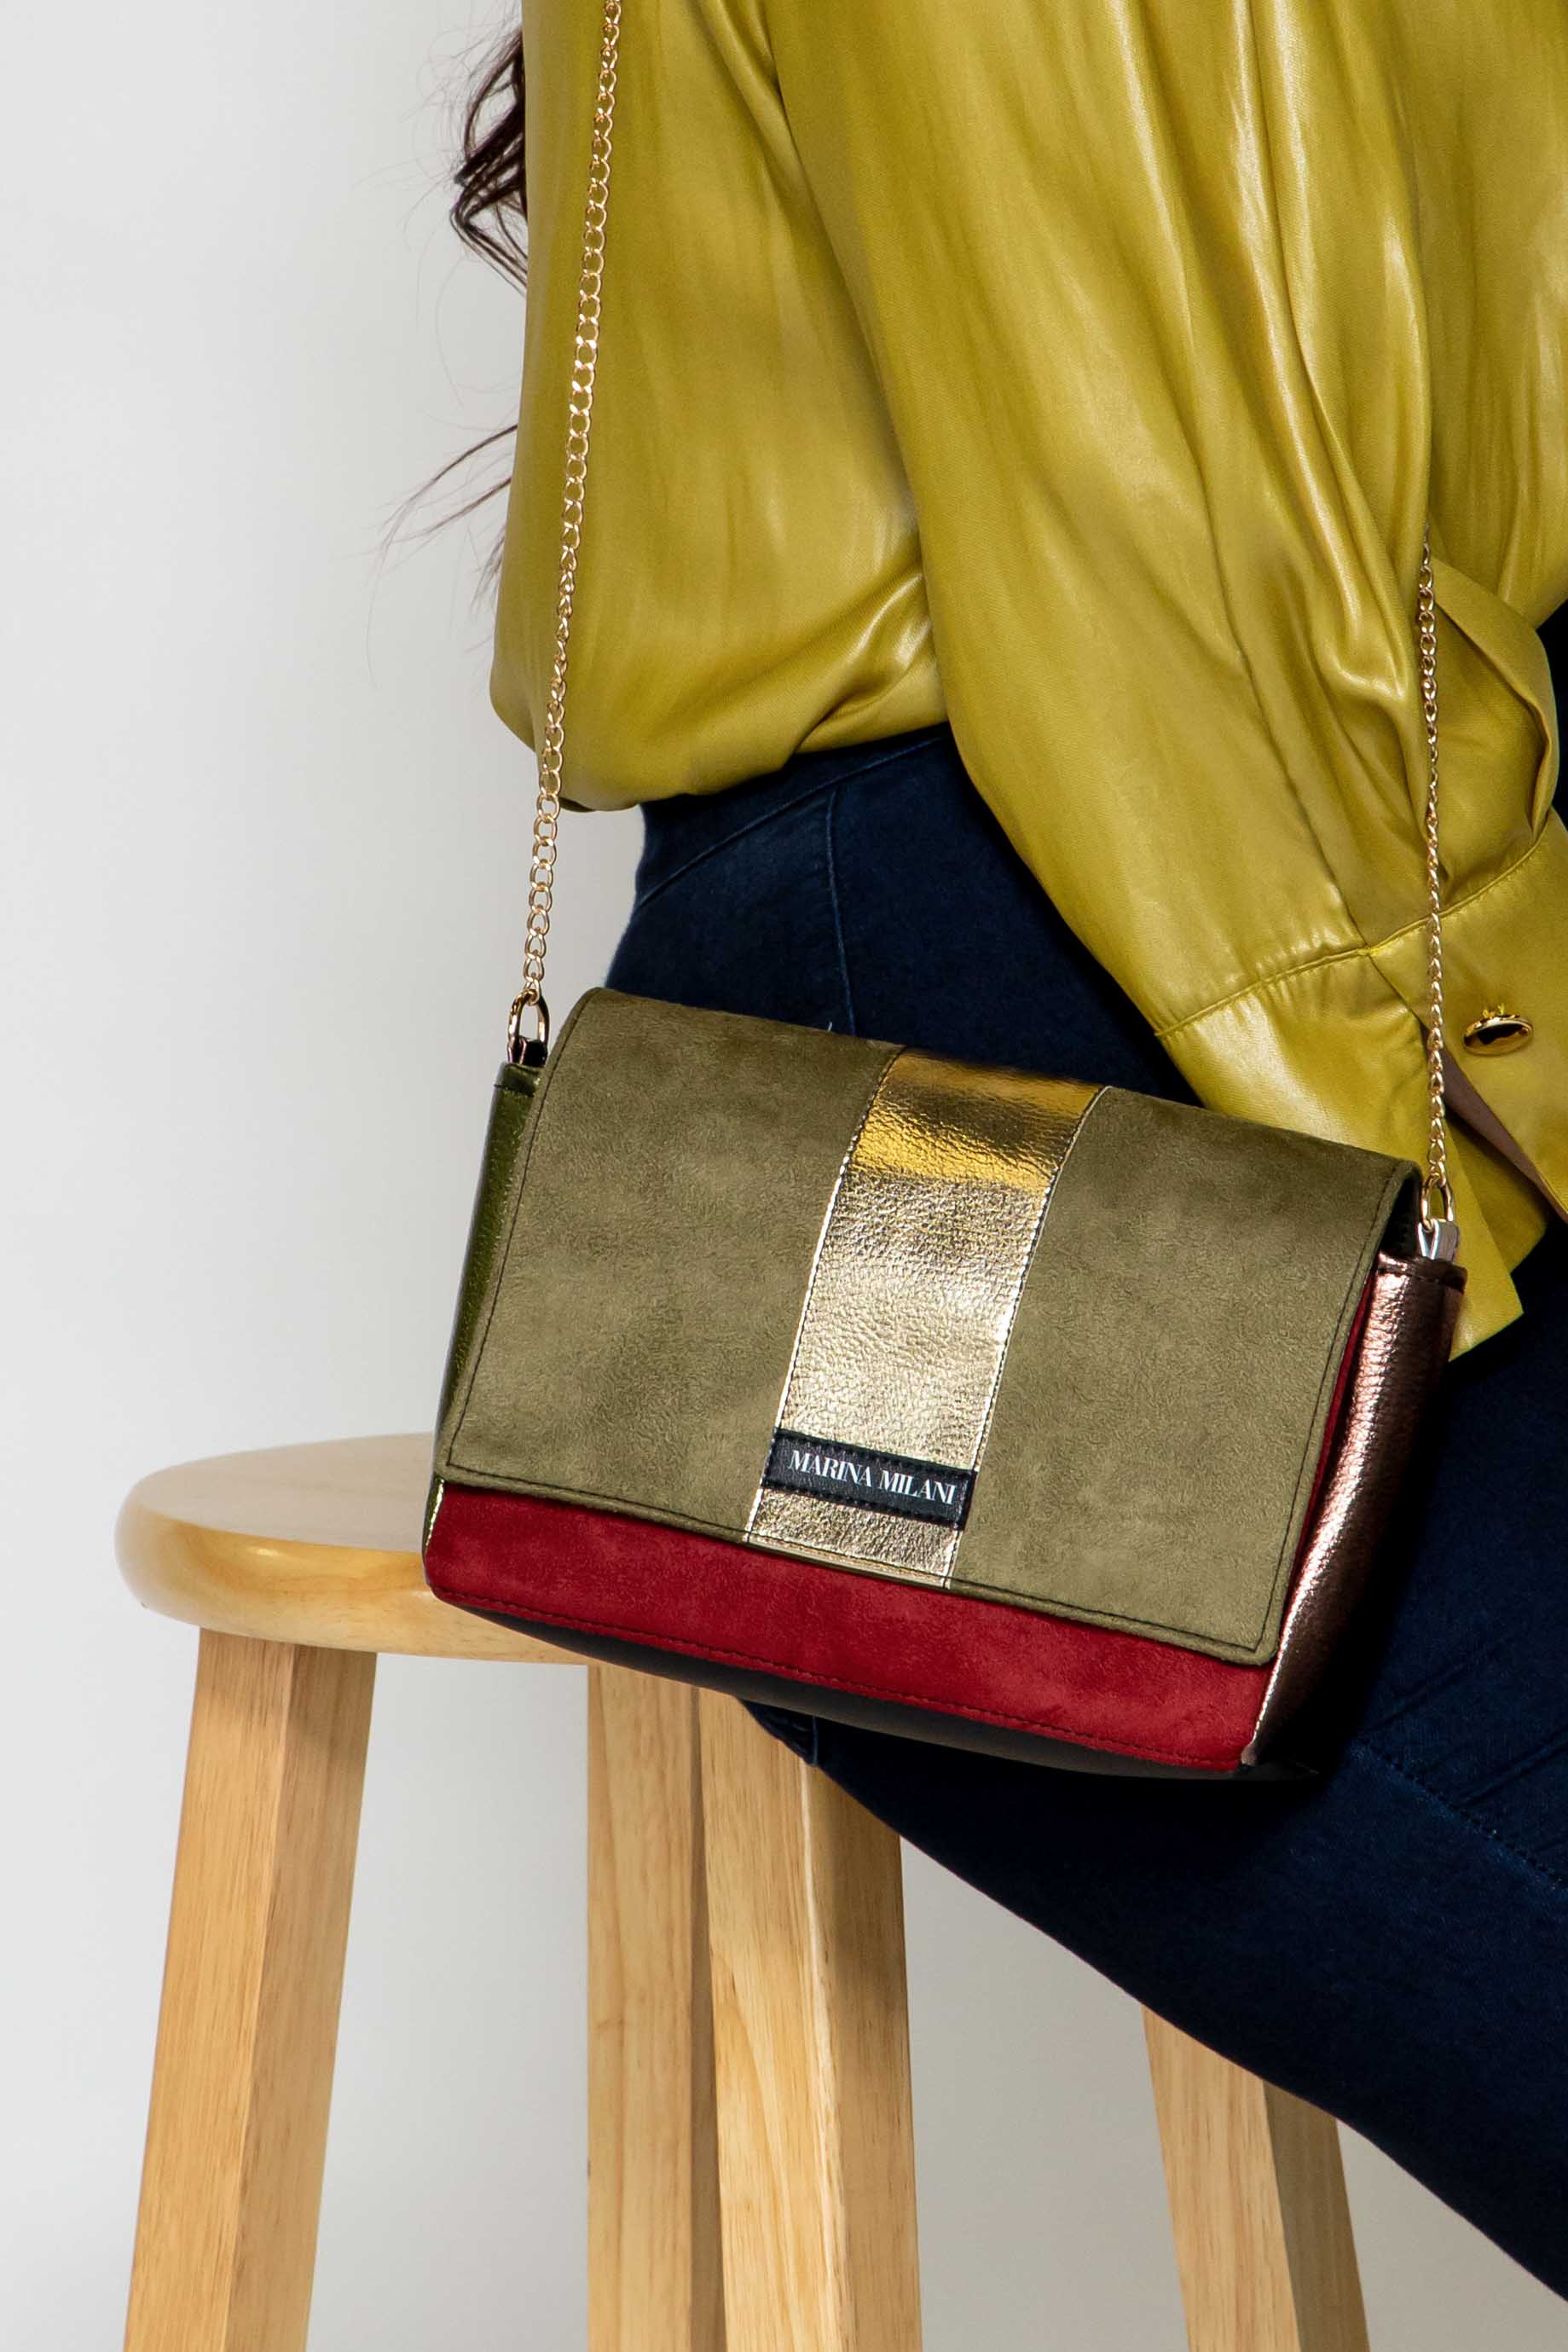 Marina Milani BAGS Sustainable Multi-colored Golden Chain Mini Shoulder Bag